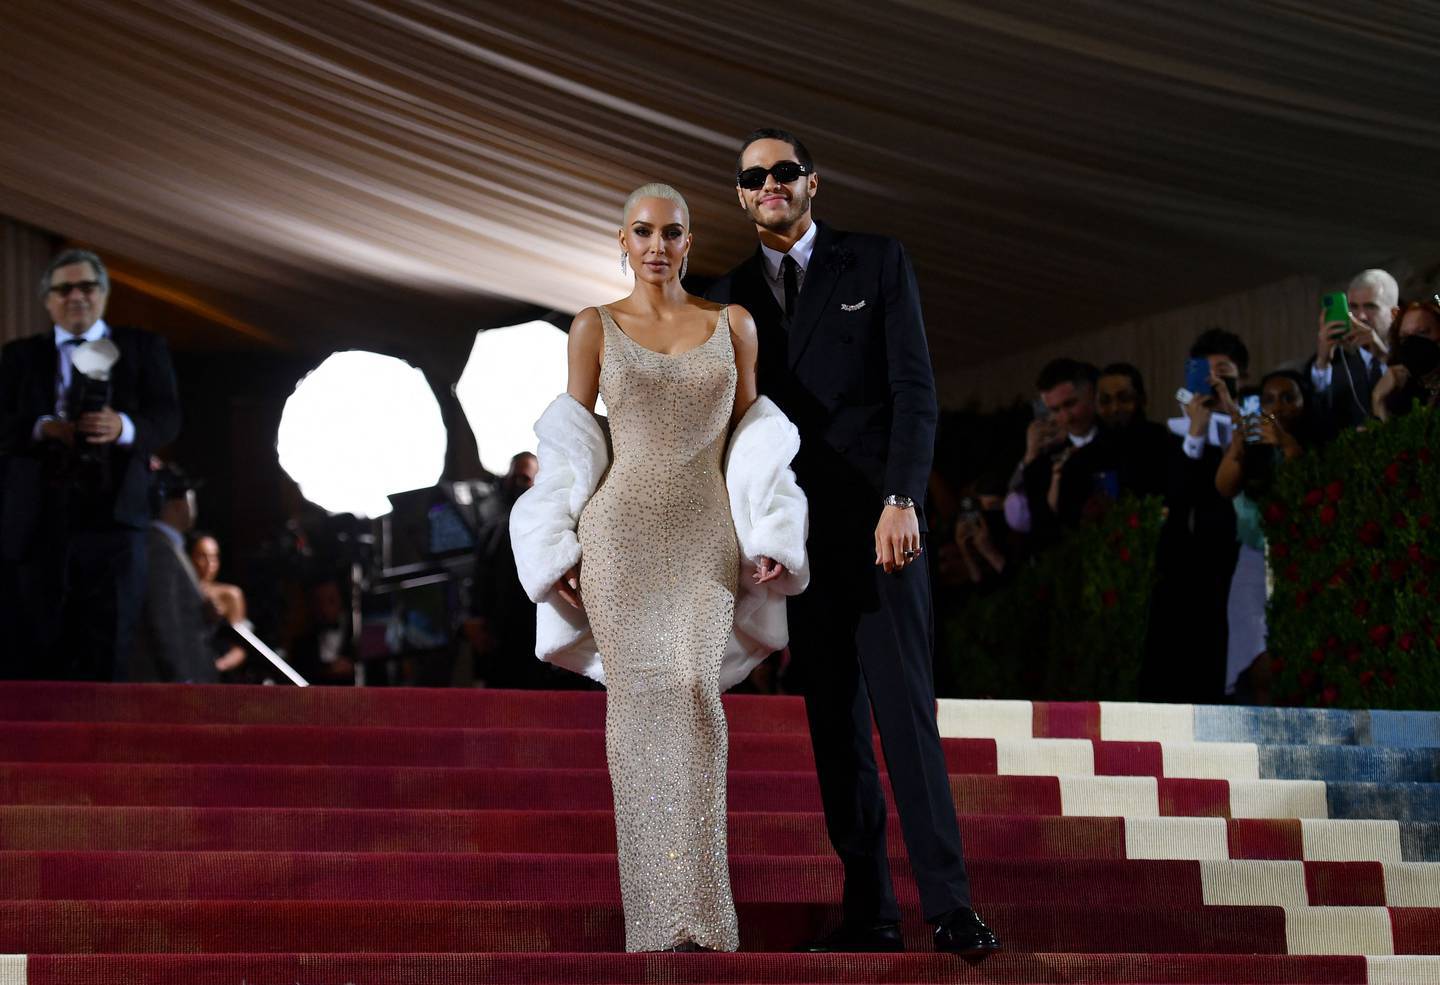 Kim Kardashian arrives to The Met Gala in a dress famously worn by Marilyn Monroe.